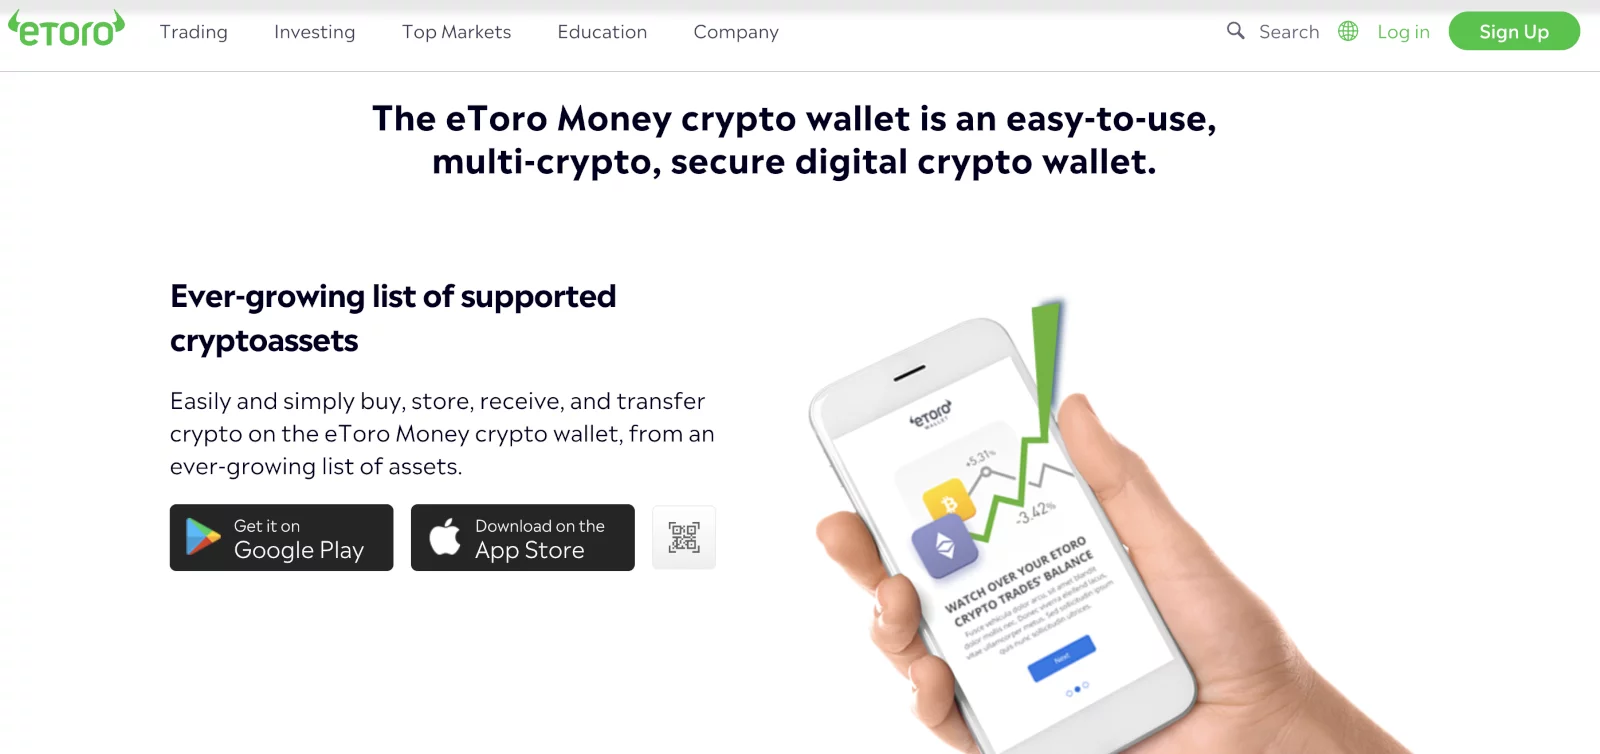 5. eToro Money - Your Trusted XRP Wallet 